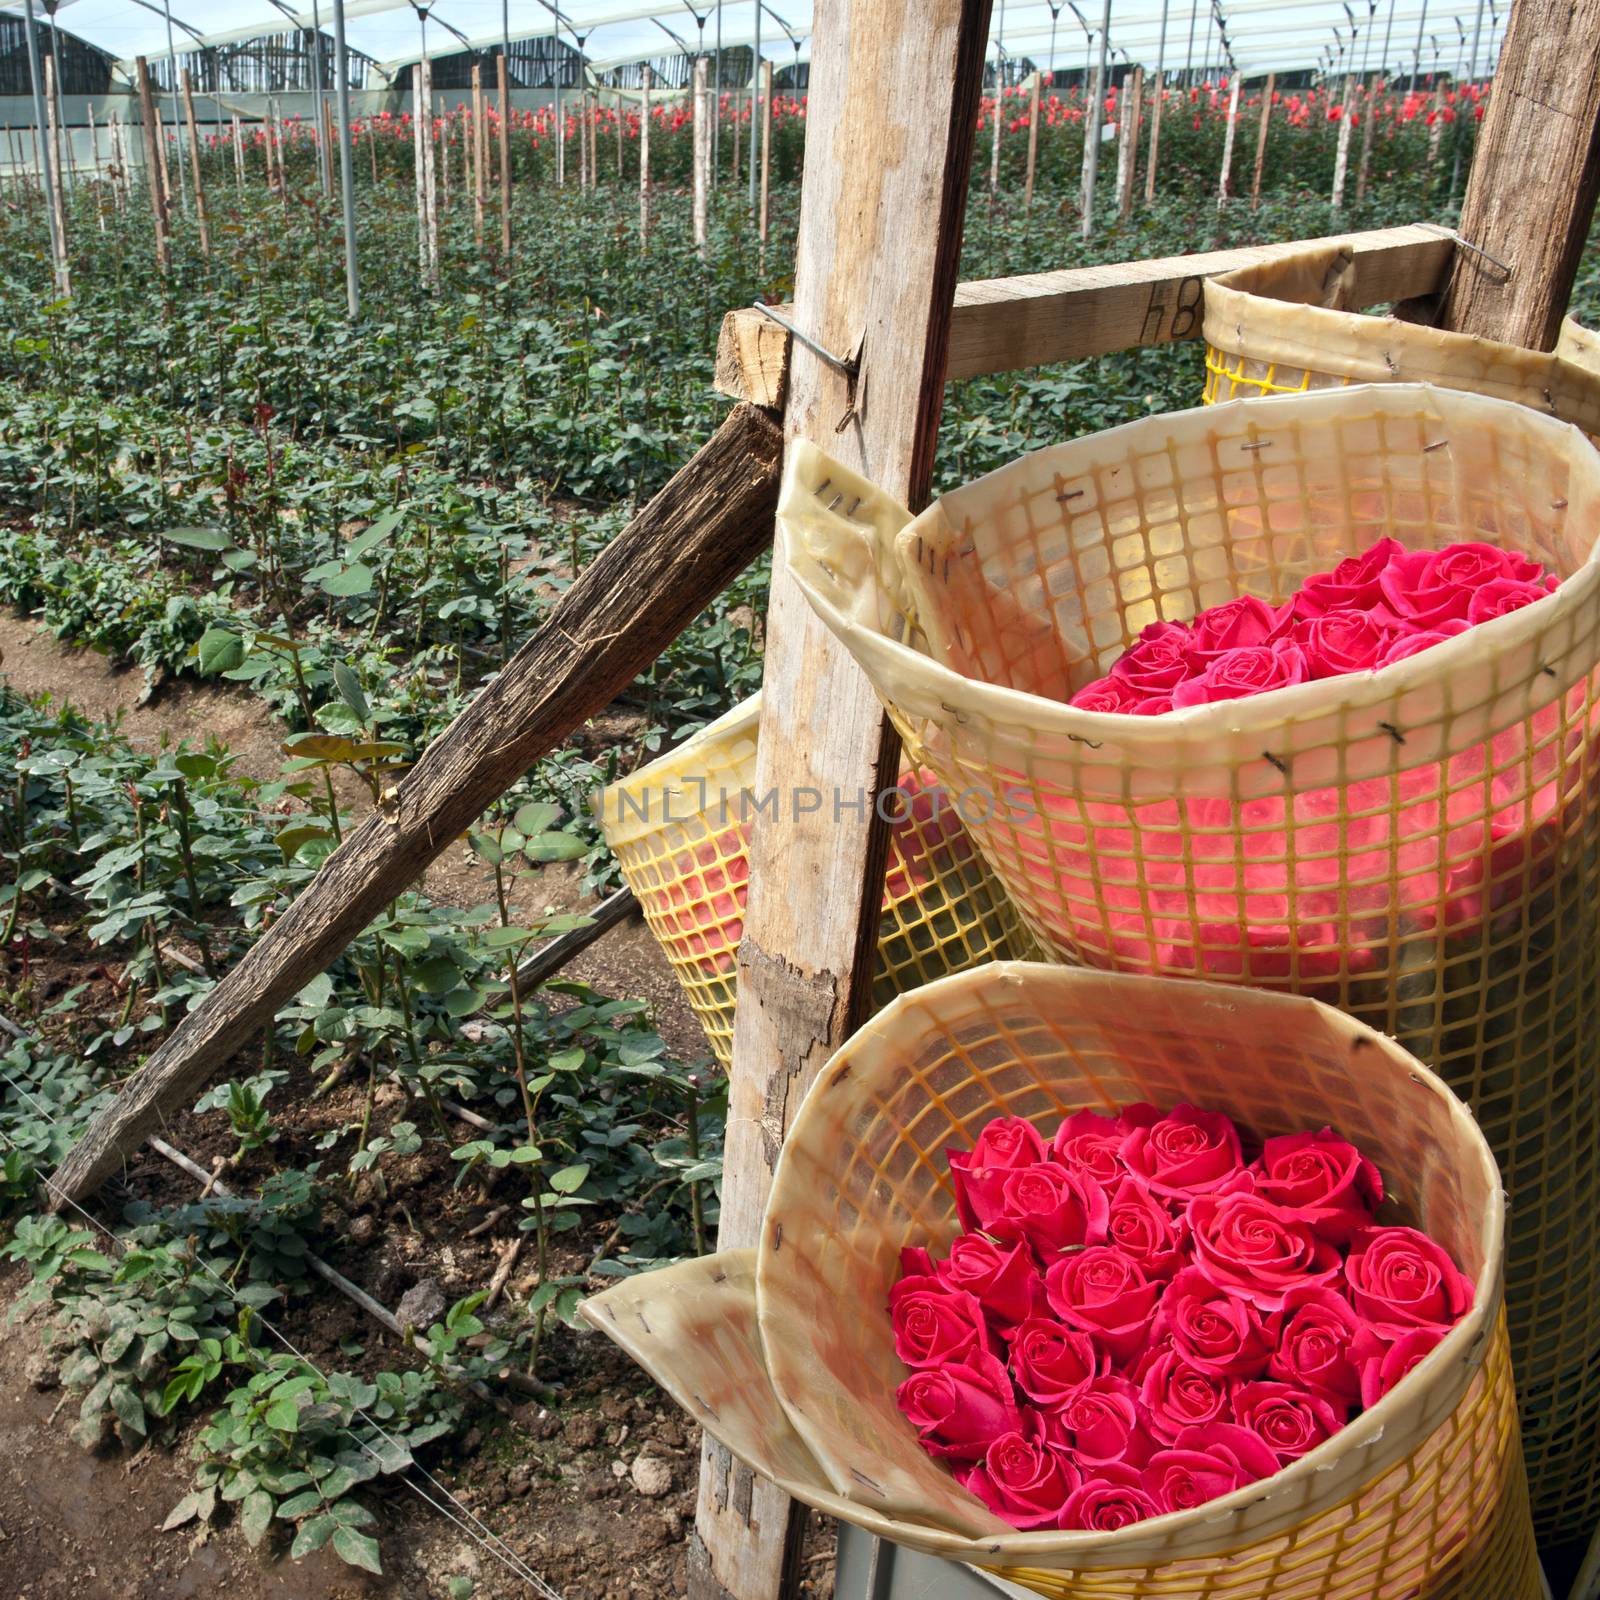 Roses Harvest, plantation in Tumbaco, Cayambe, Ecuador, South America